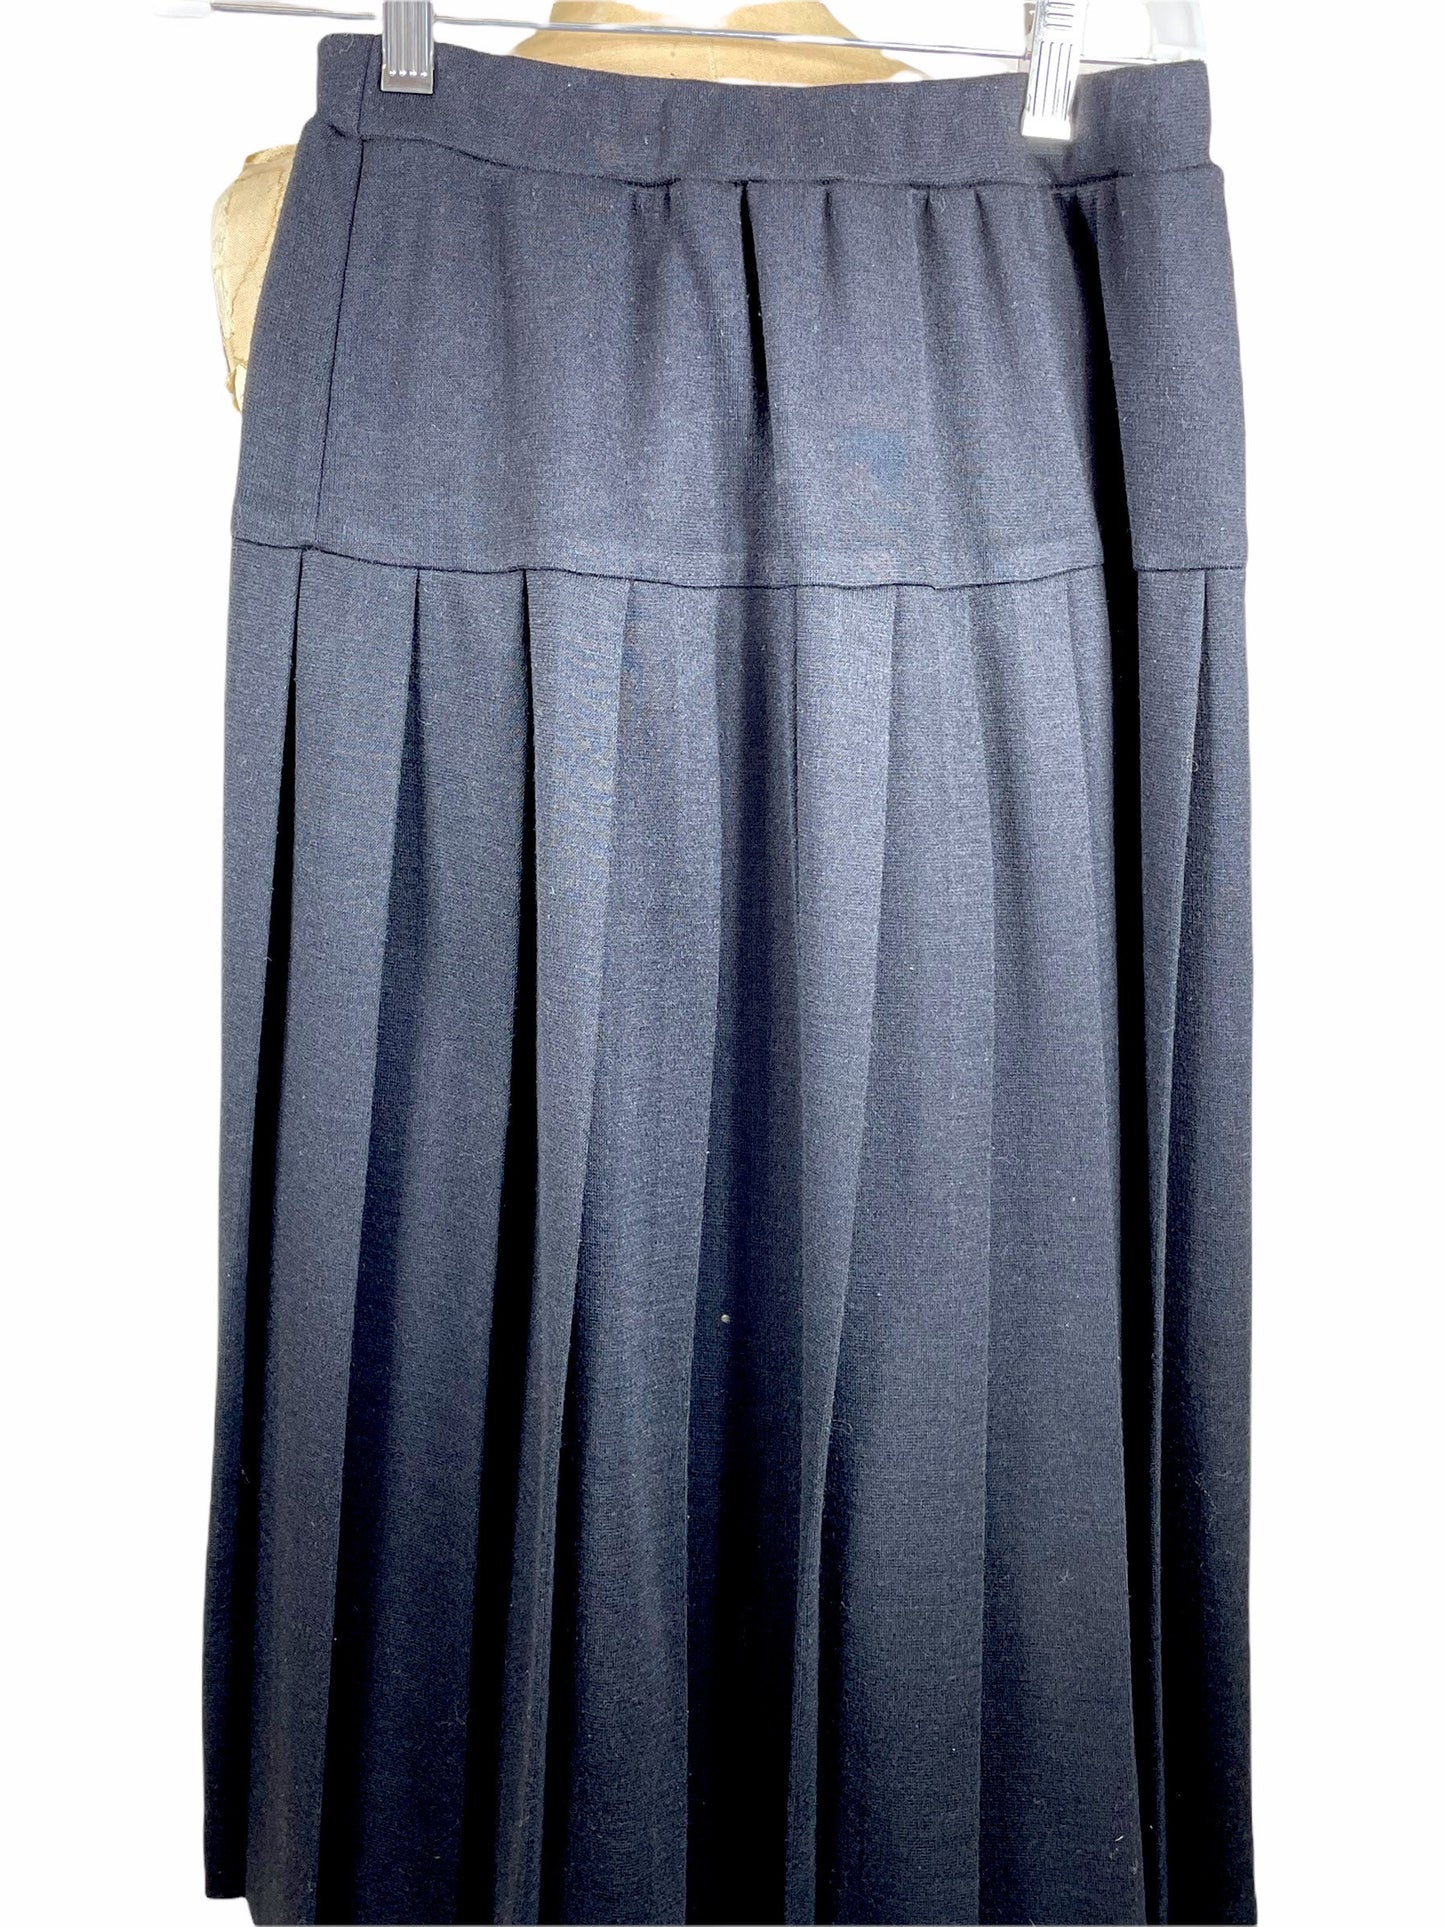 Vintage black knit pleated skirt Boston Traveler Size M